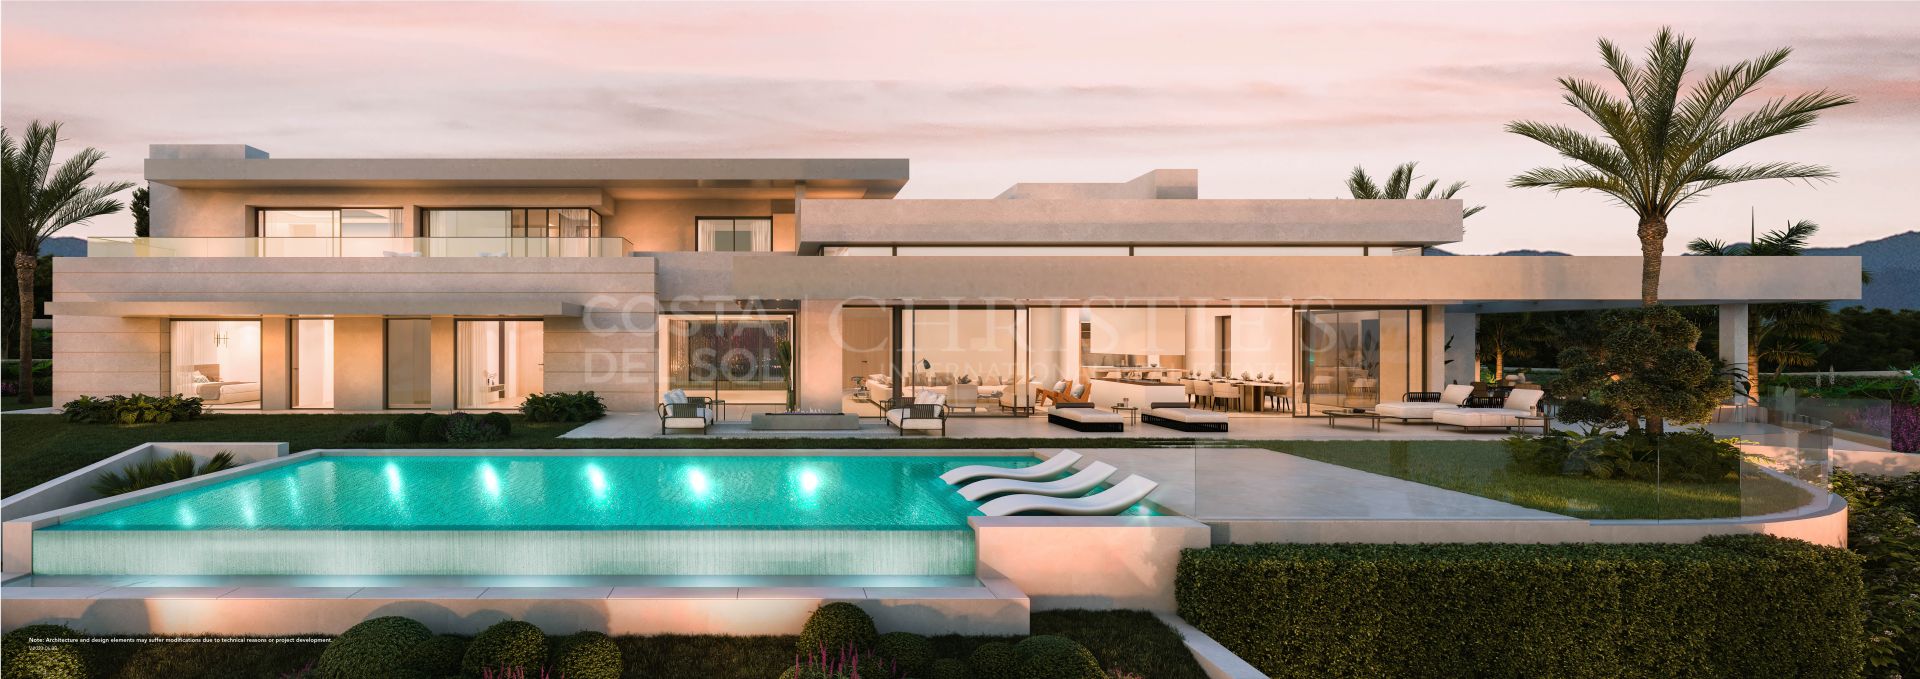 ELIE SAAB RESIDENCES, Sierra Blanca, Milla de Oro de Marbella - Residencias Elie Saab | Christie’s International Real Estate